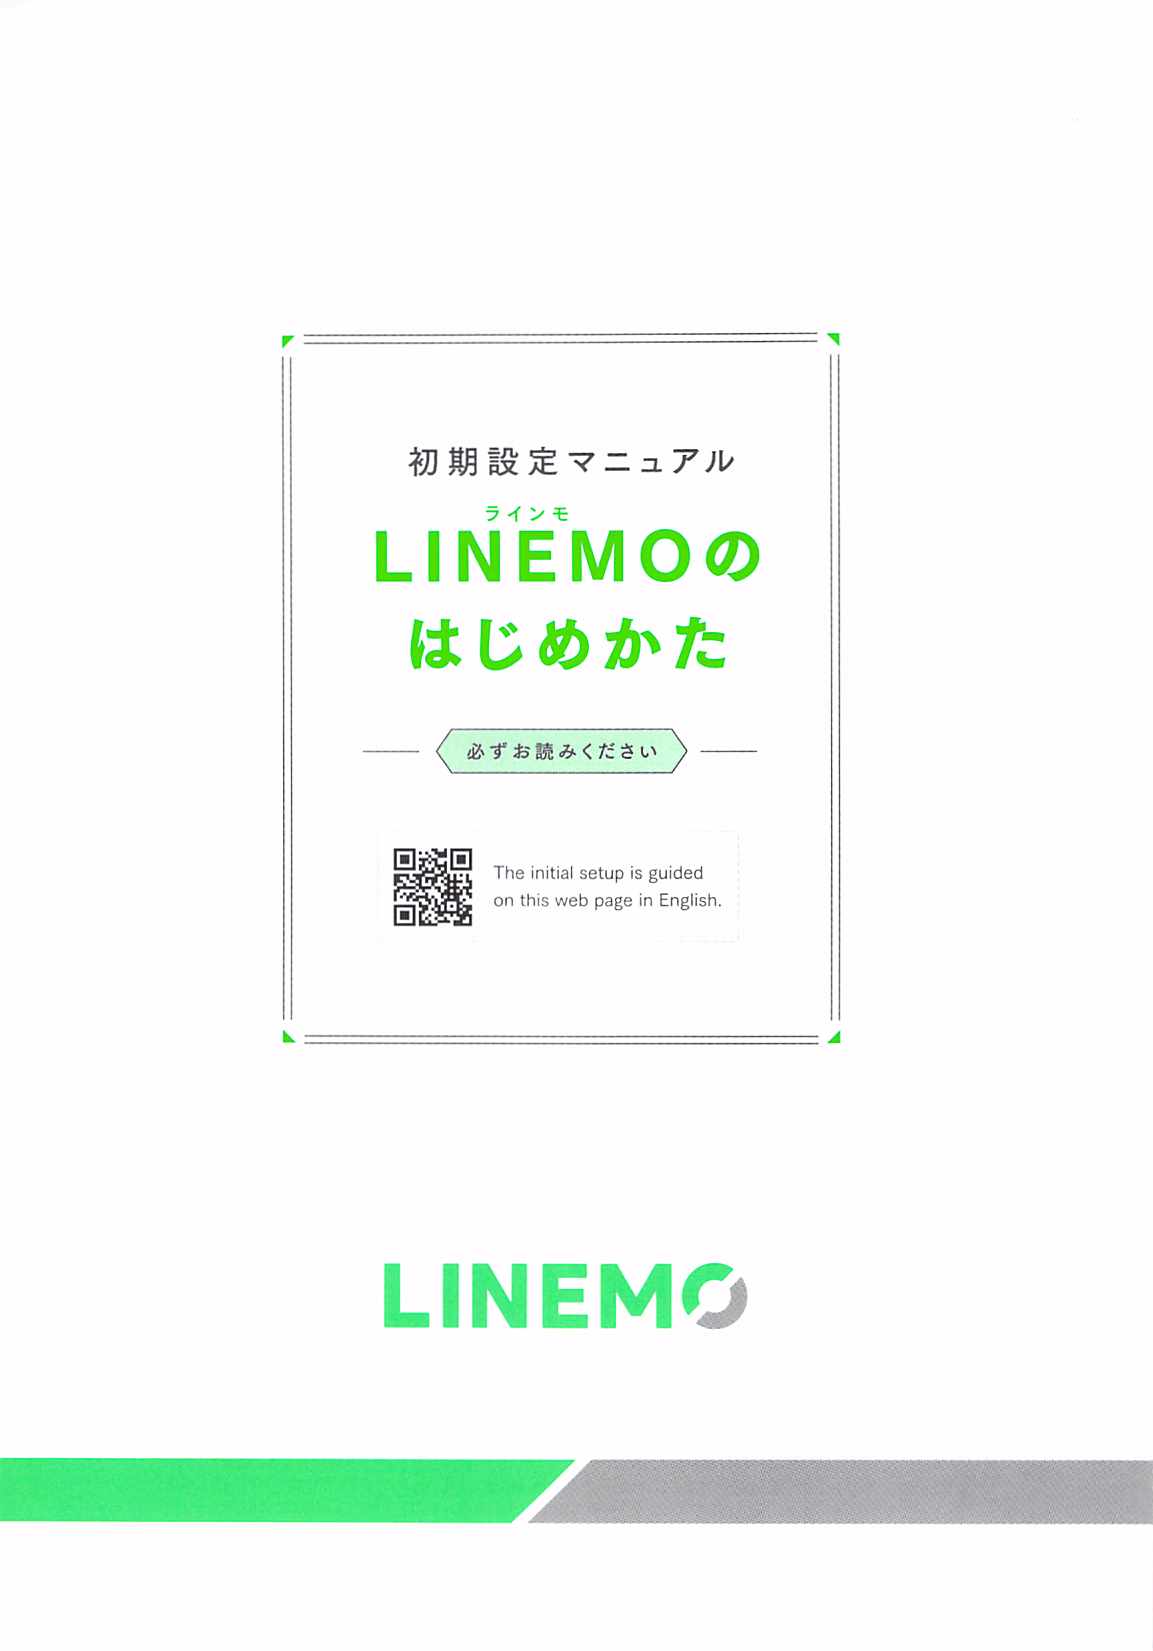 LINEMO初期設定